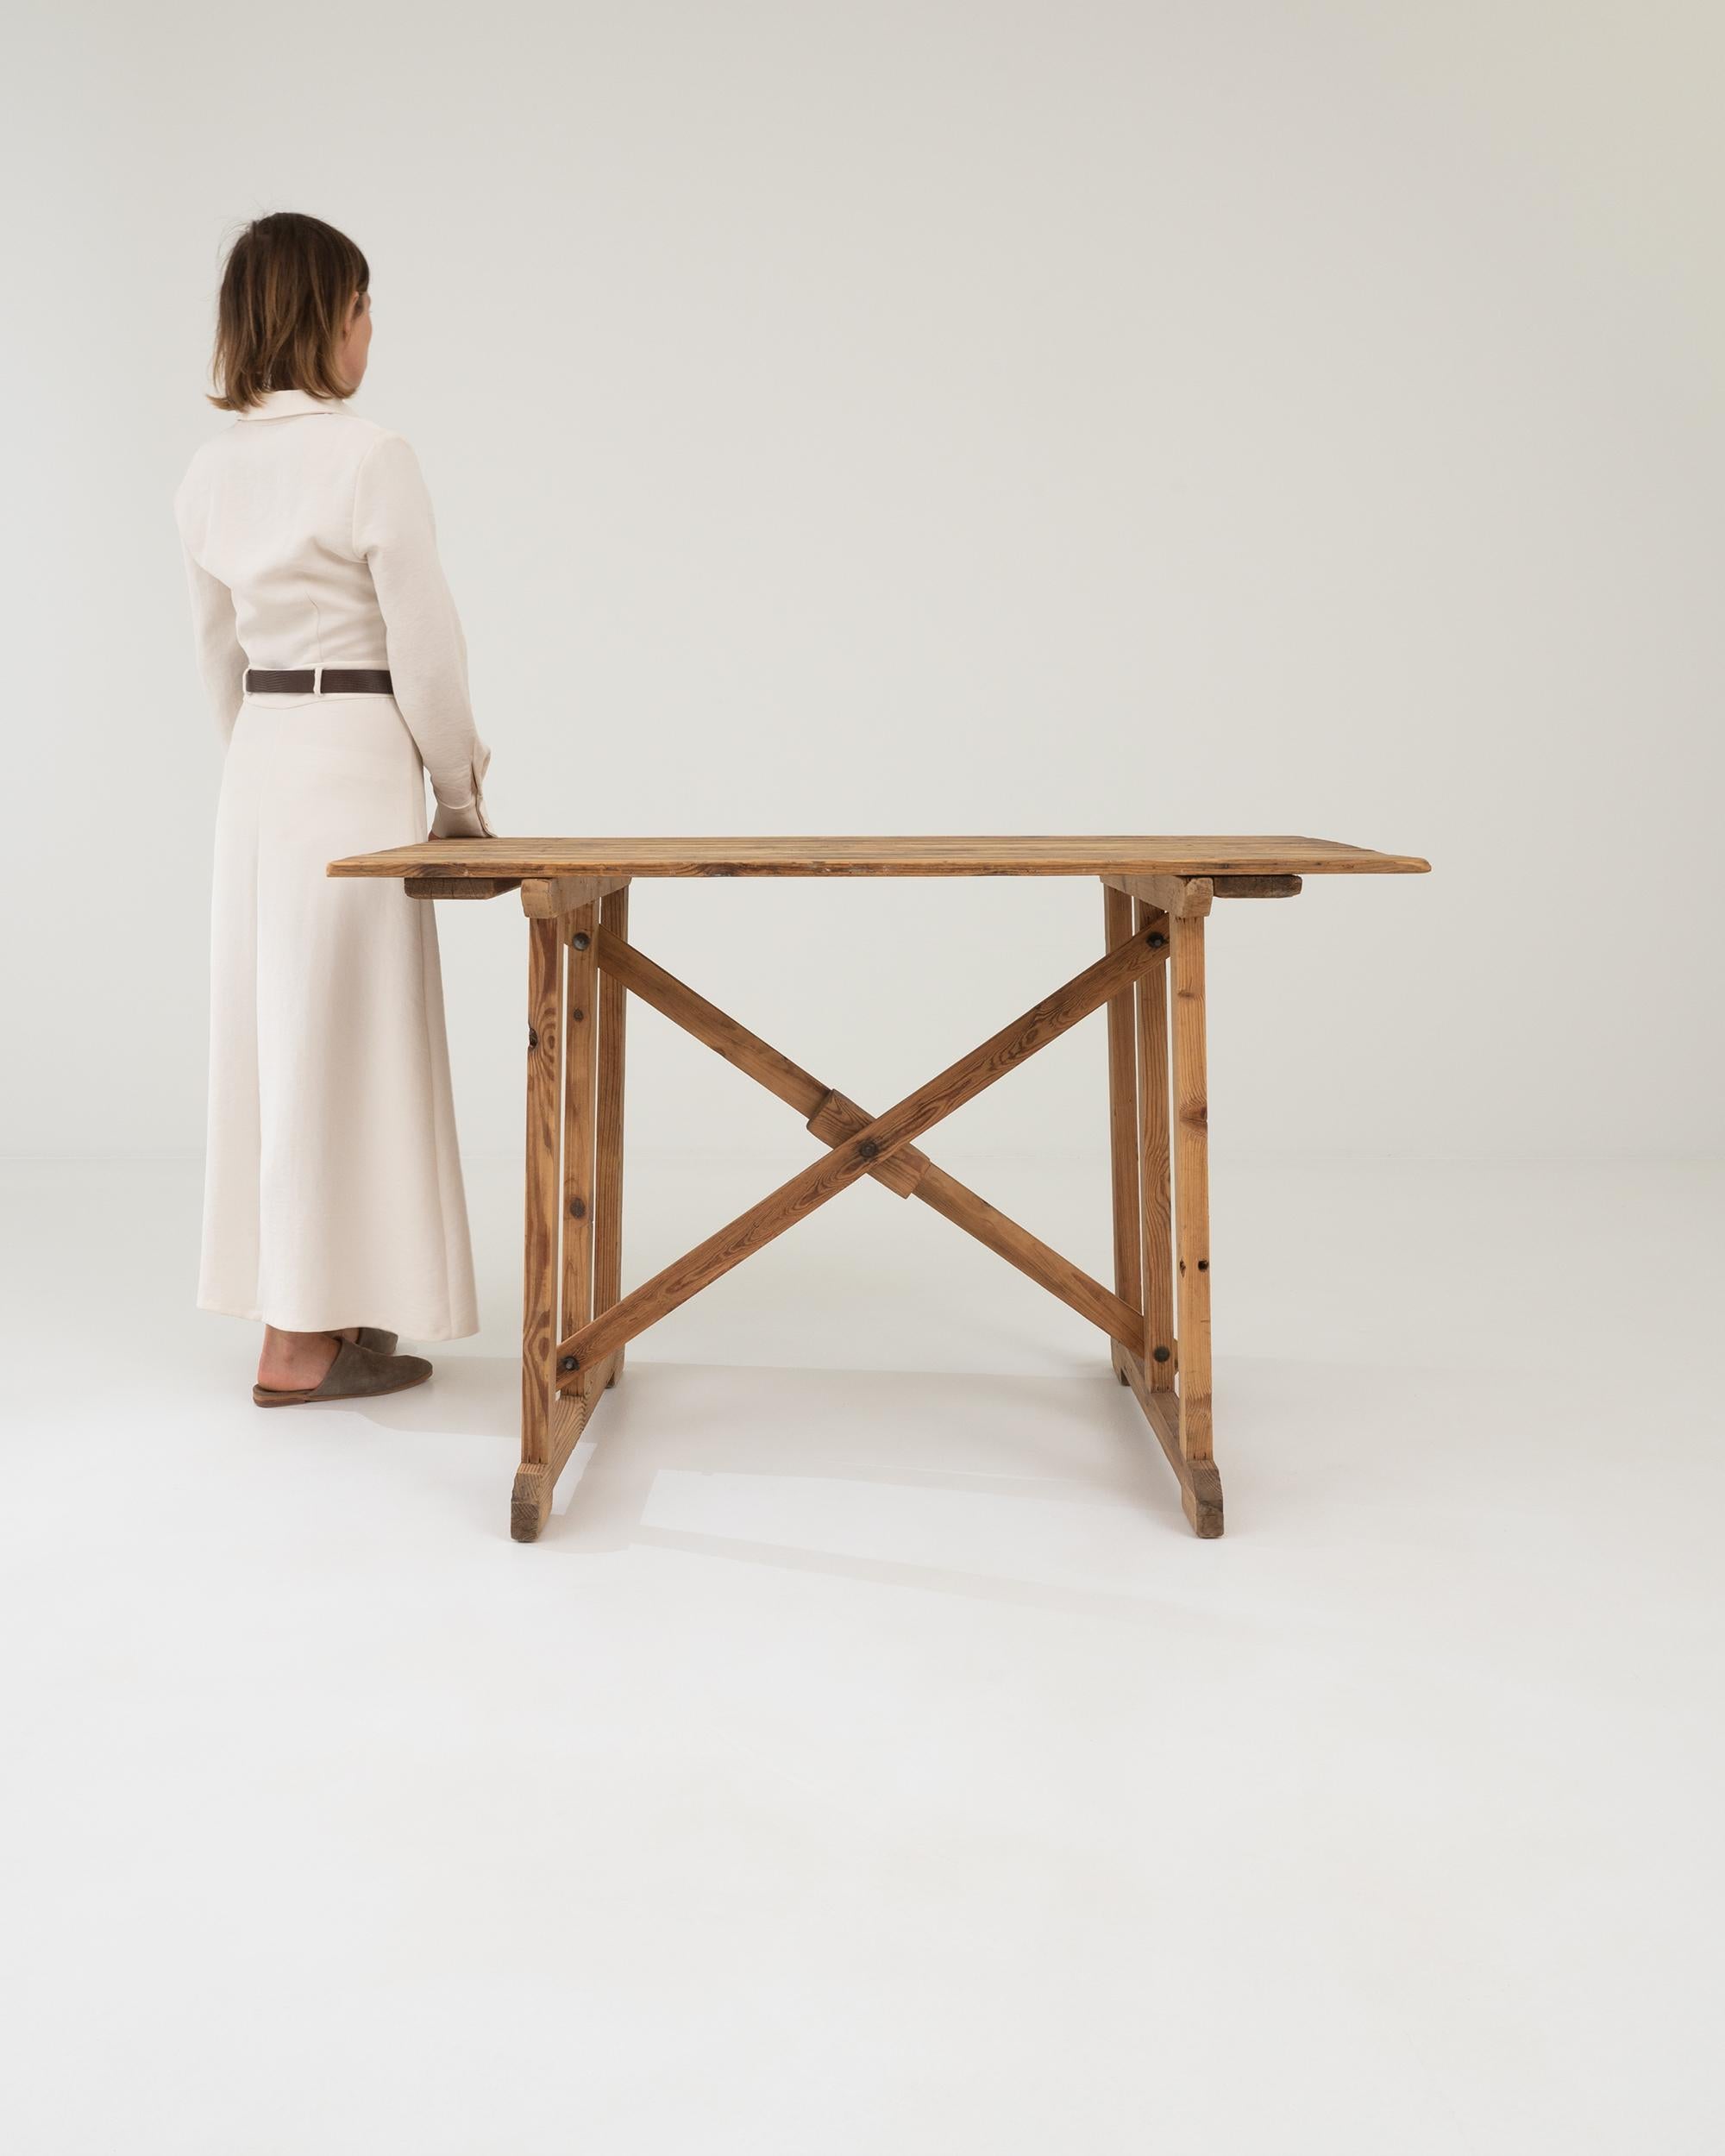 Rustic Vintage Belgian Wooden Table For Sale